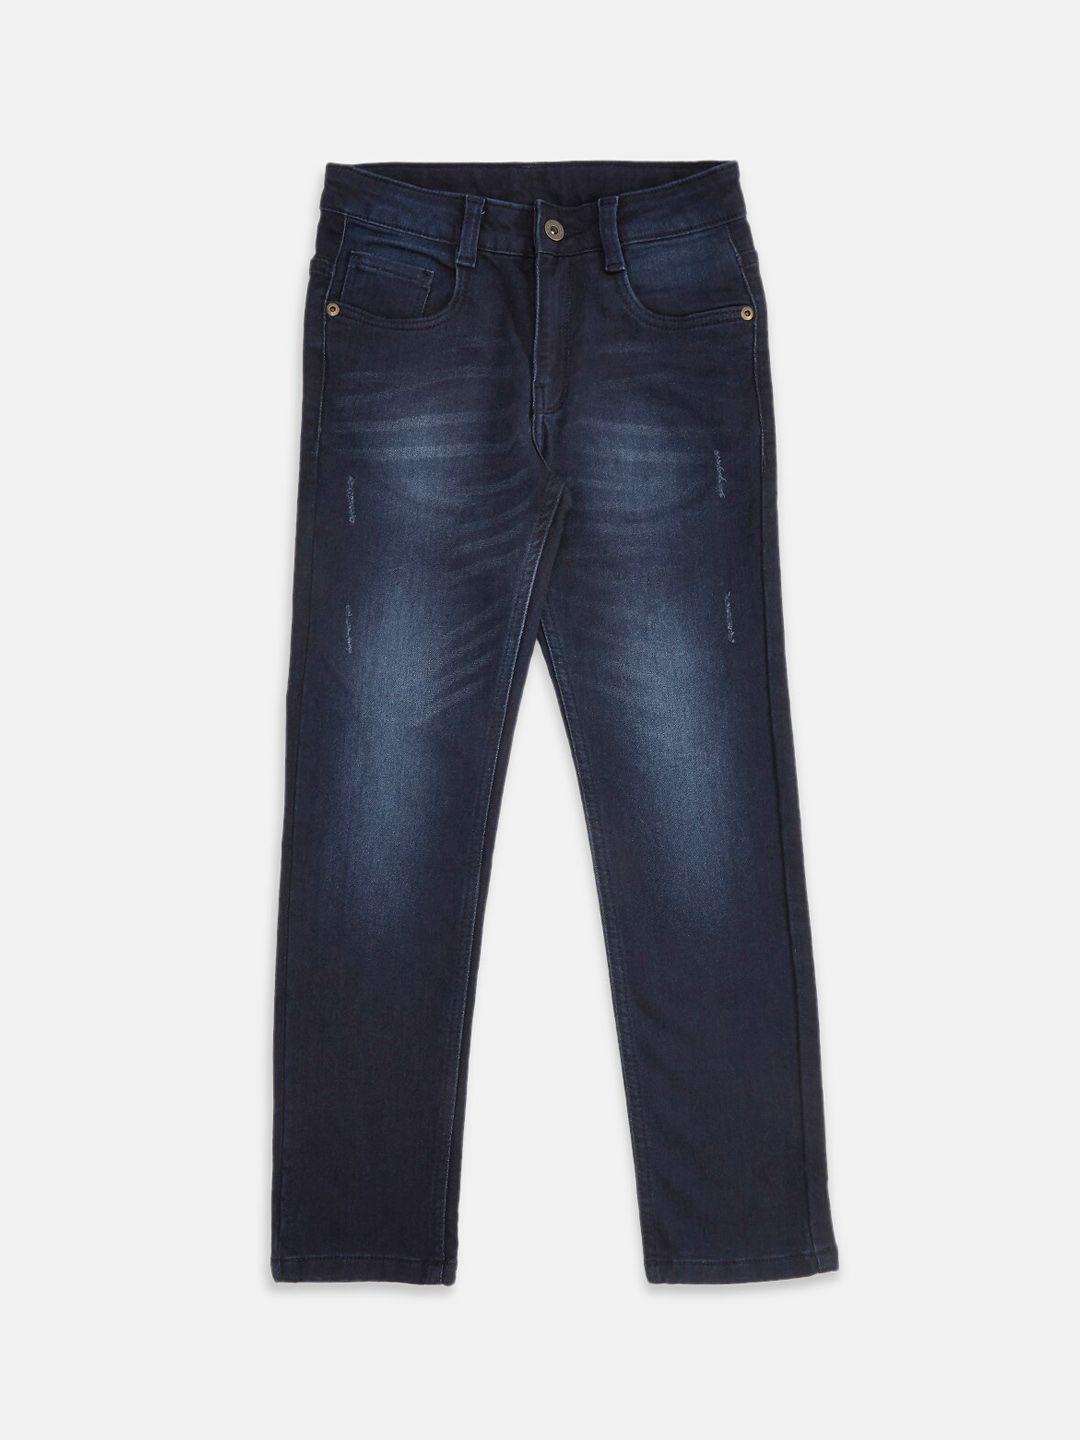 pantaloons junior boys navy blue tapered fit light fade jeans